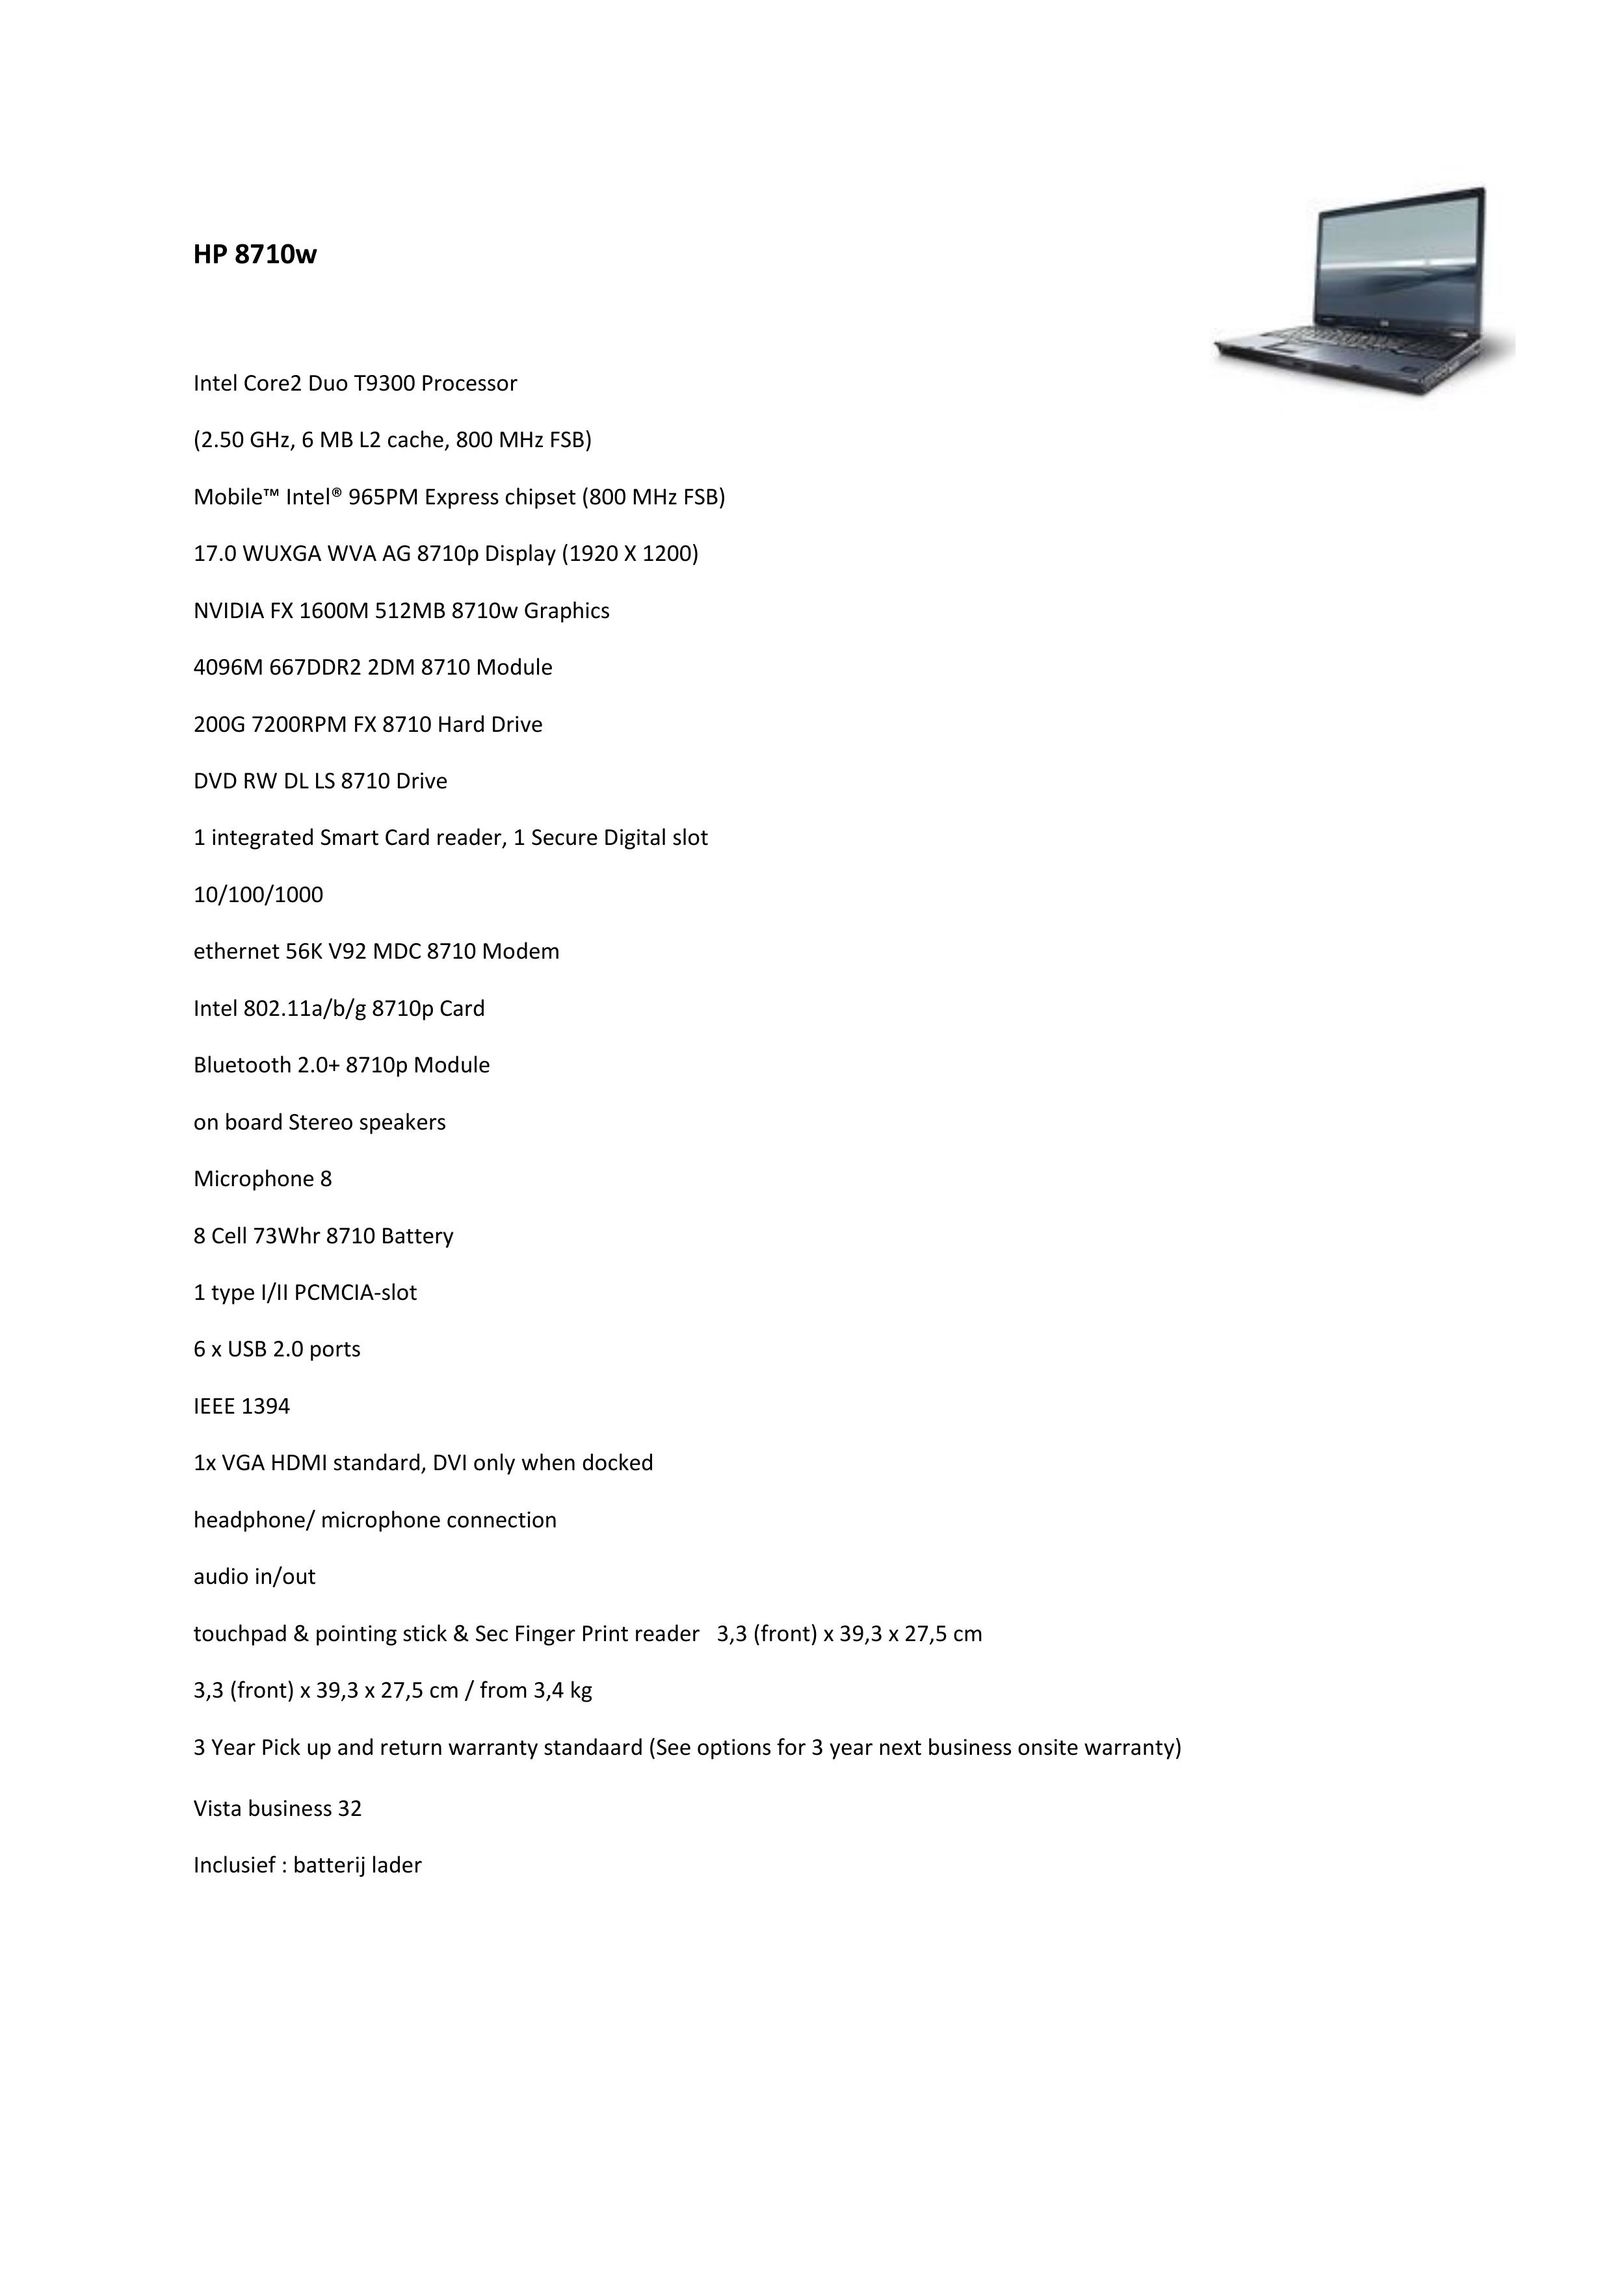 Intel HP8710w Laptop User Manual